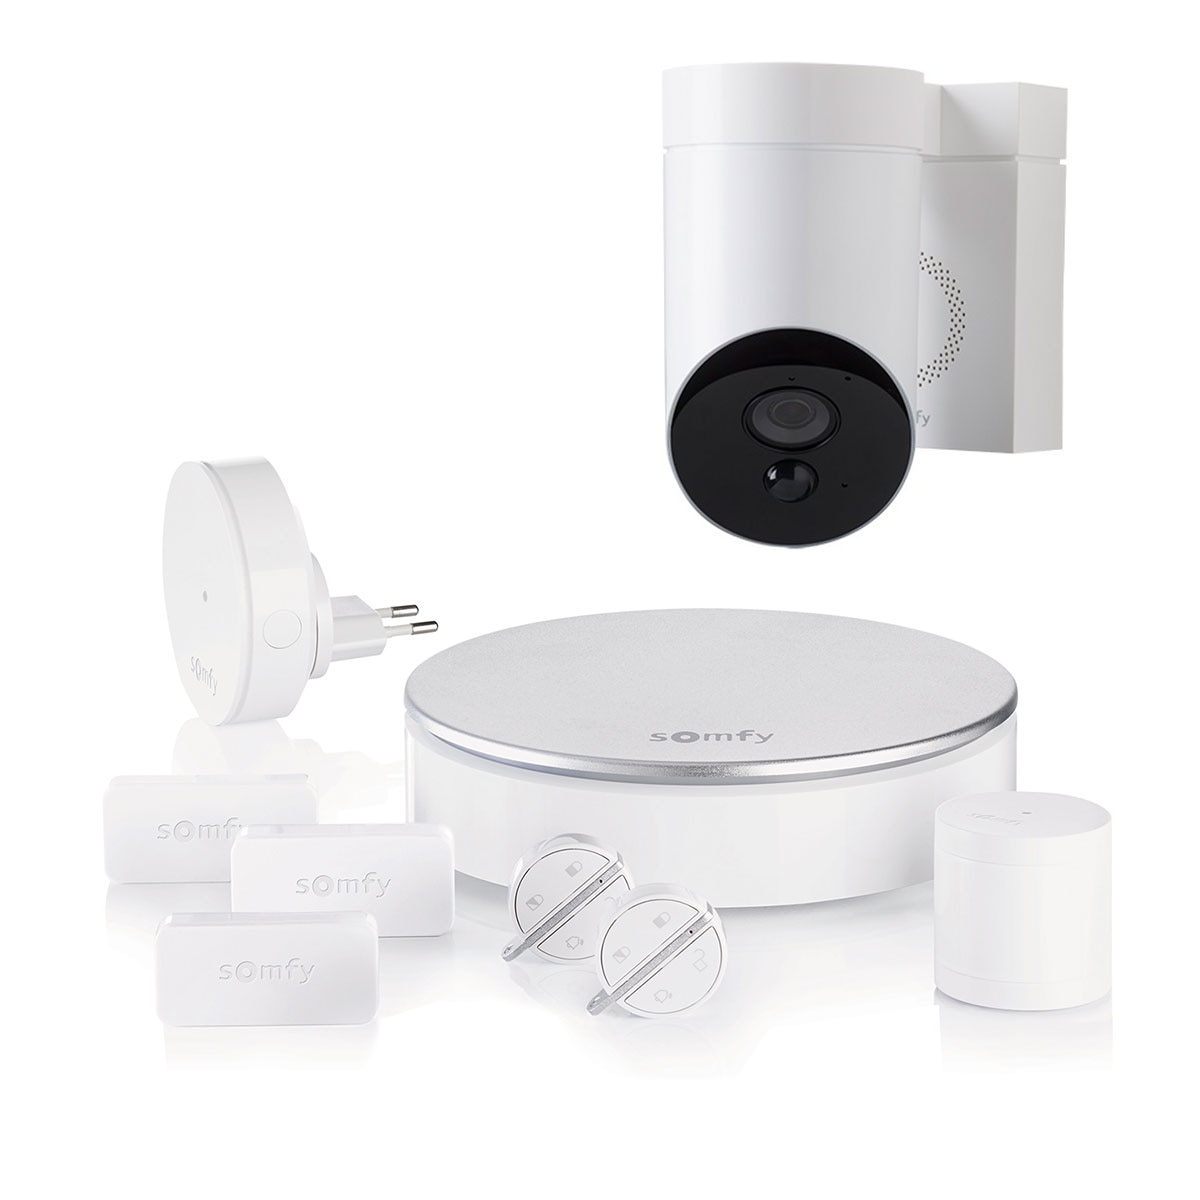 Somfy Home Alarmsysteem – Inclusief witte Outdoor Beveiligingscamera